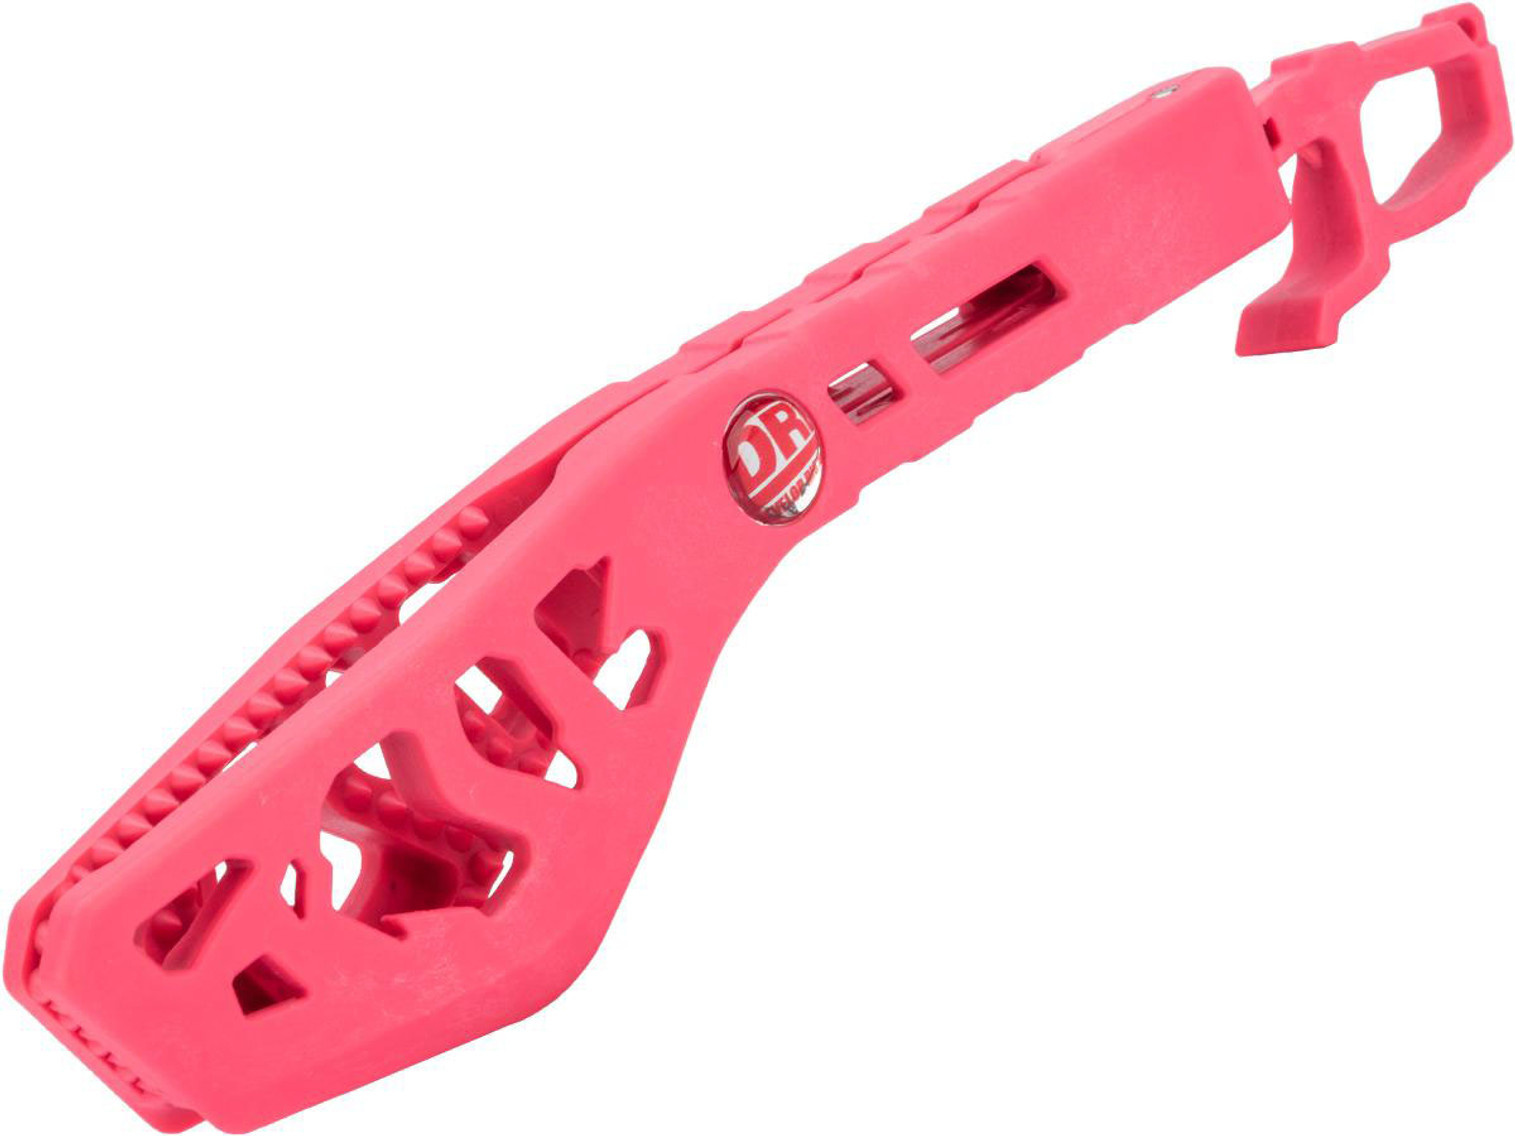 DRESS "Dino Grip" Enhanced Fish Gripper (Color: Soft Pink)